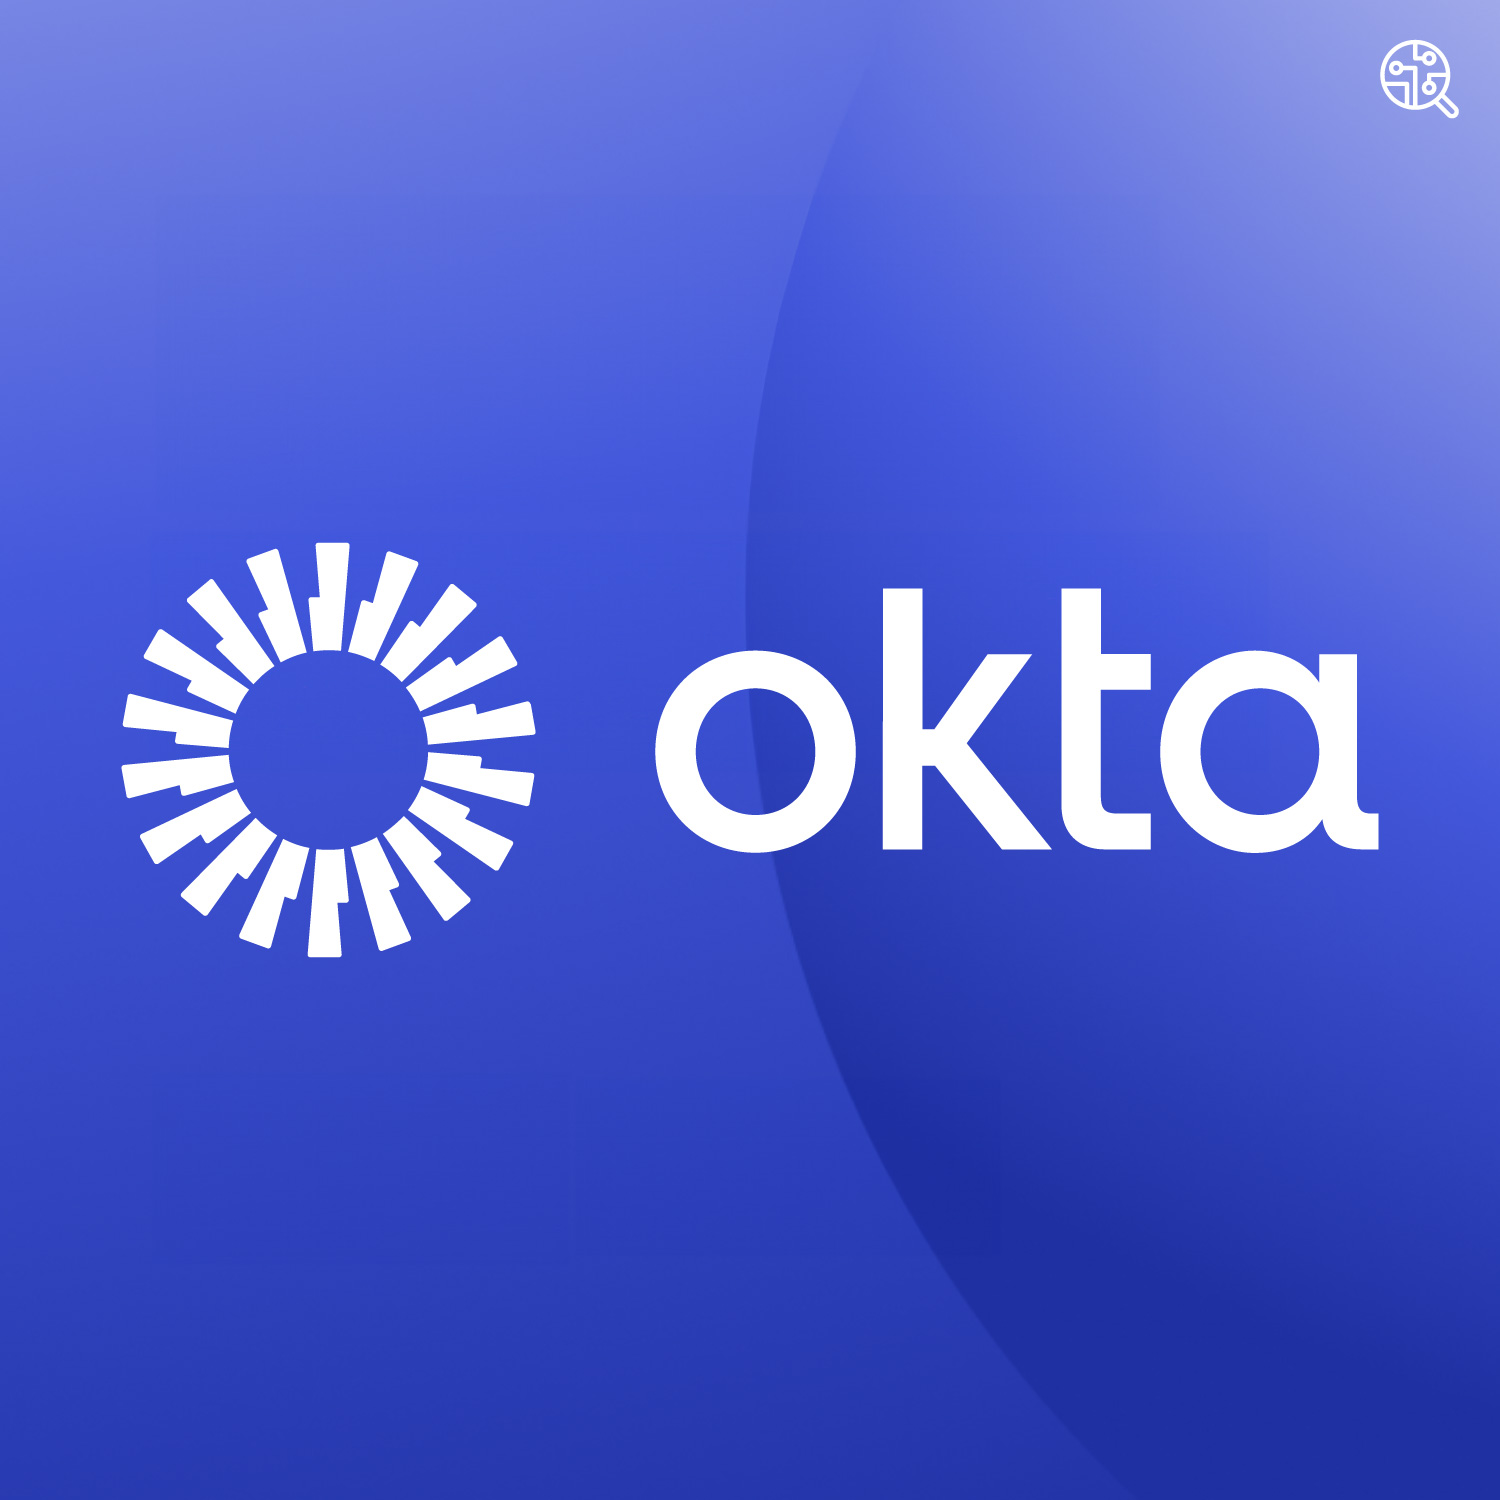 News thumbnail of the Okta logo, with Okta branding